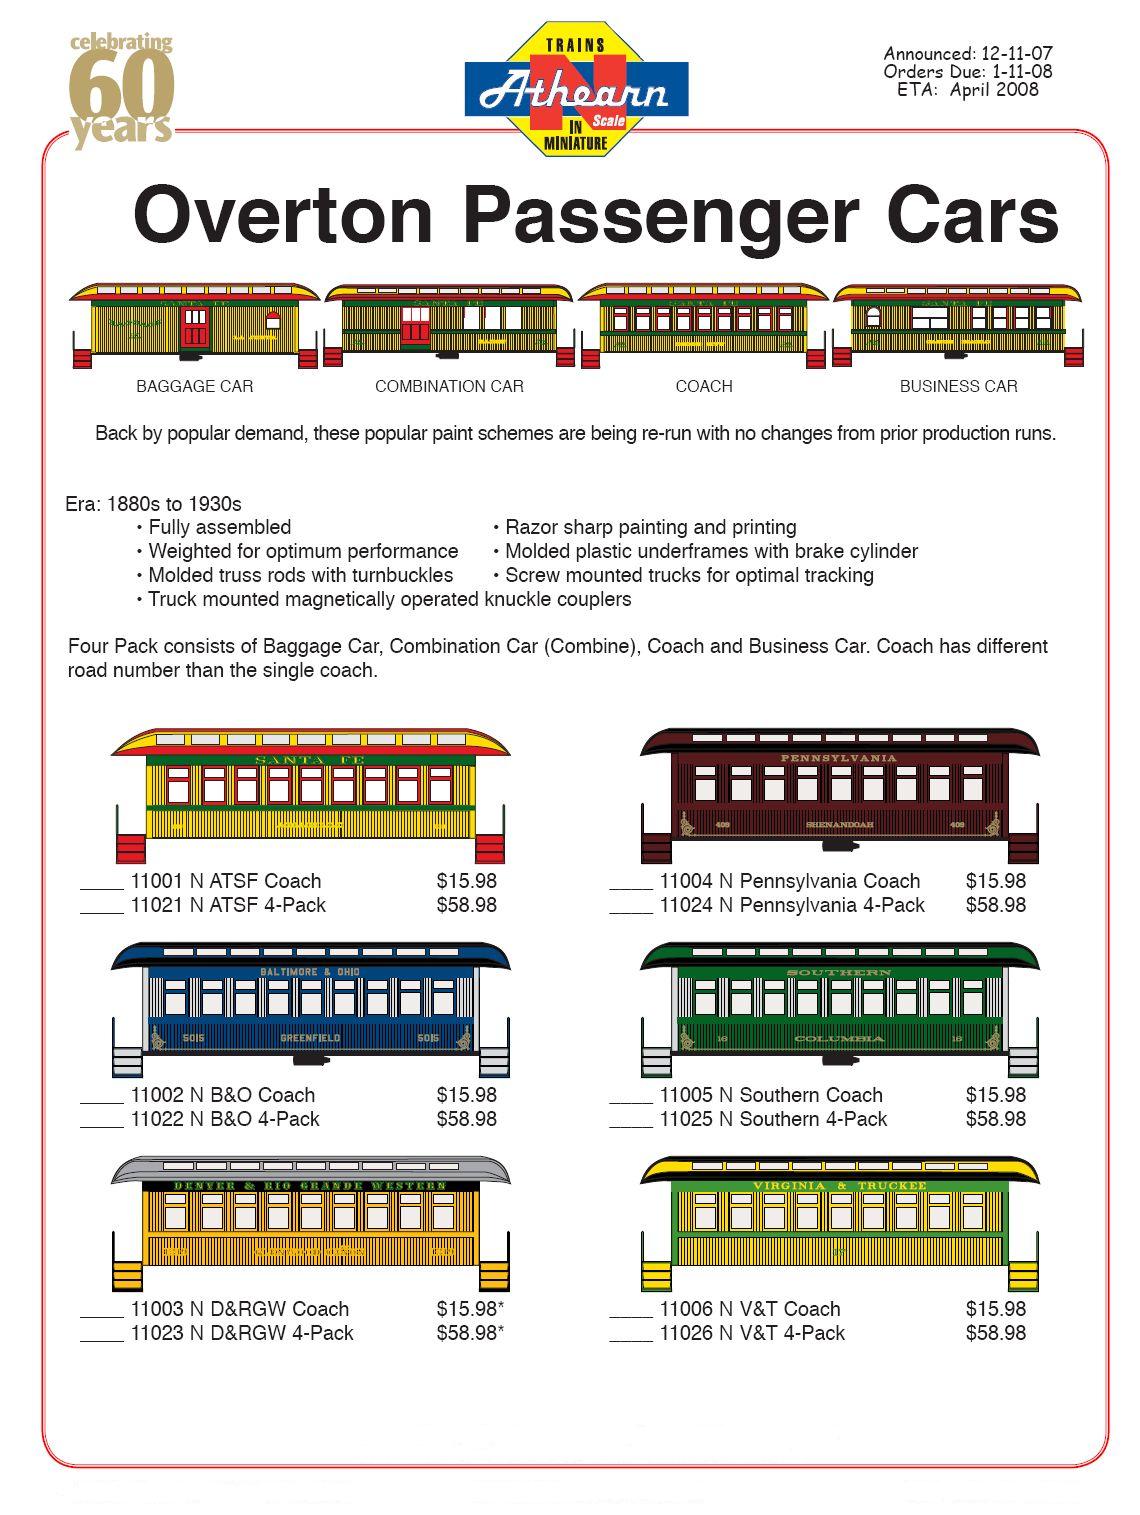 overton_passenger_cars_modified-Dec_2007